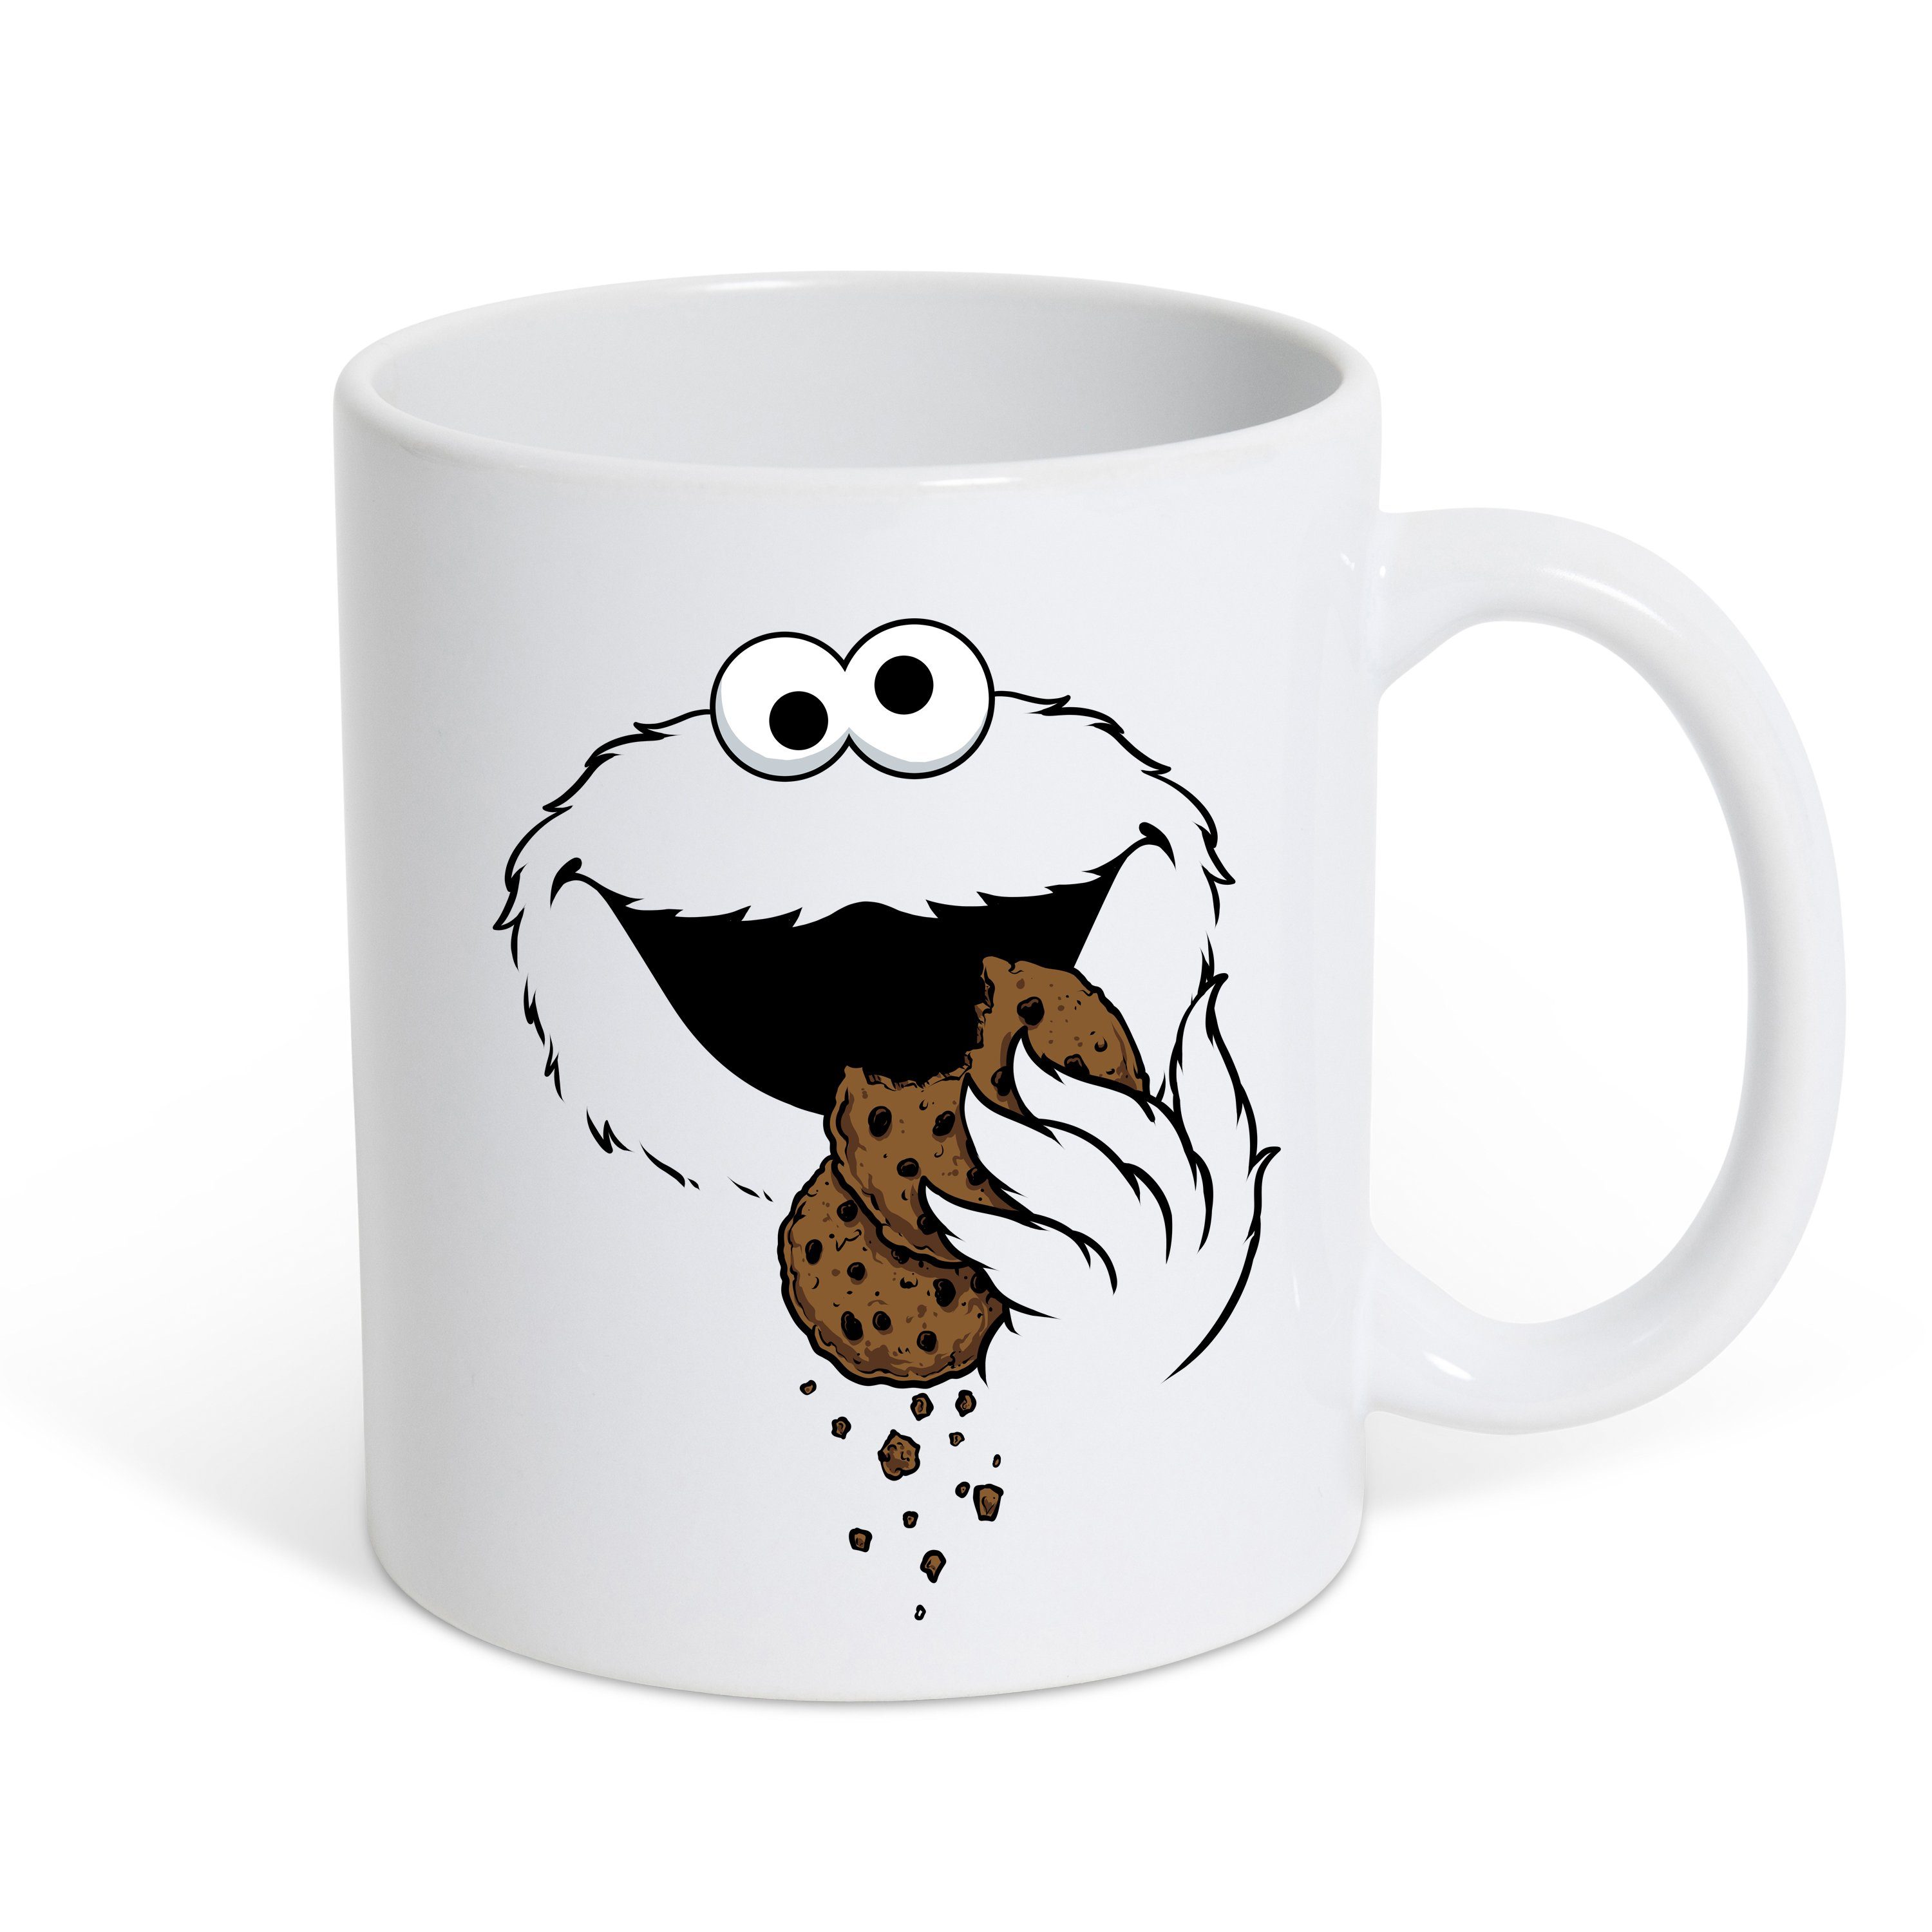 Keramik, Print Designz Youth trendigem Kekse-Monster Weiß Tasse Tasse, mit